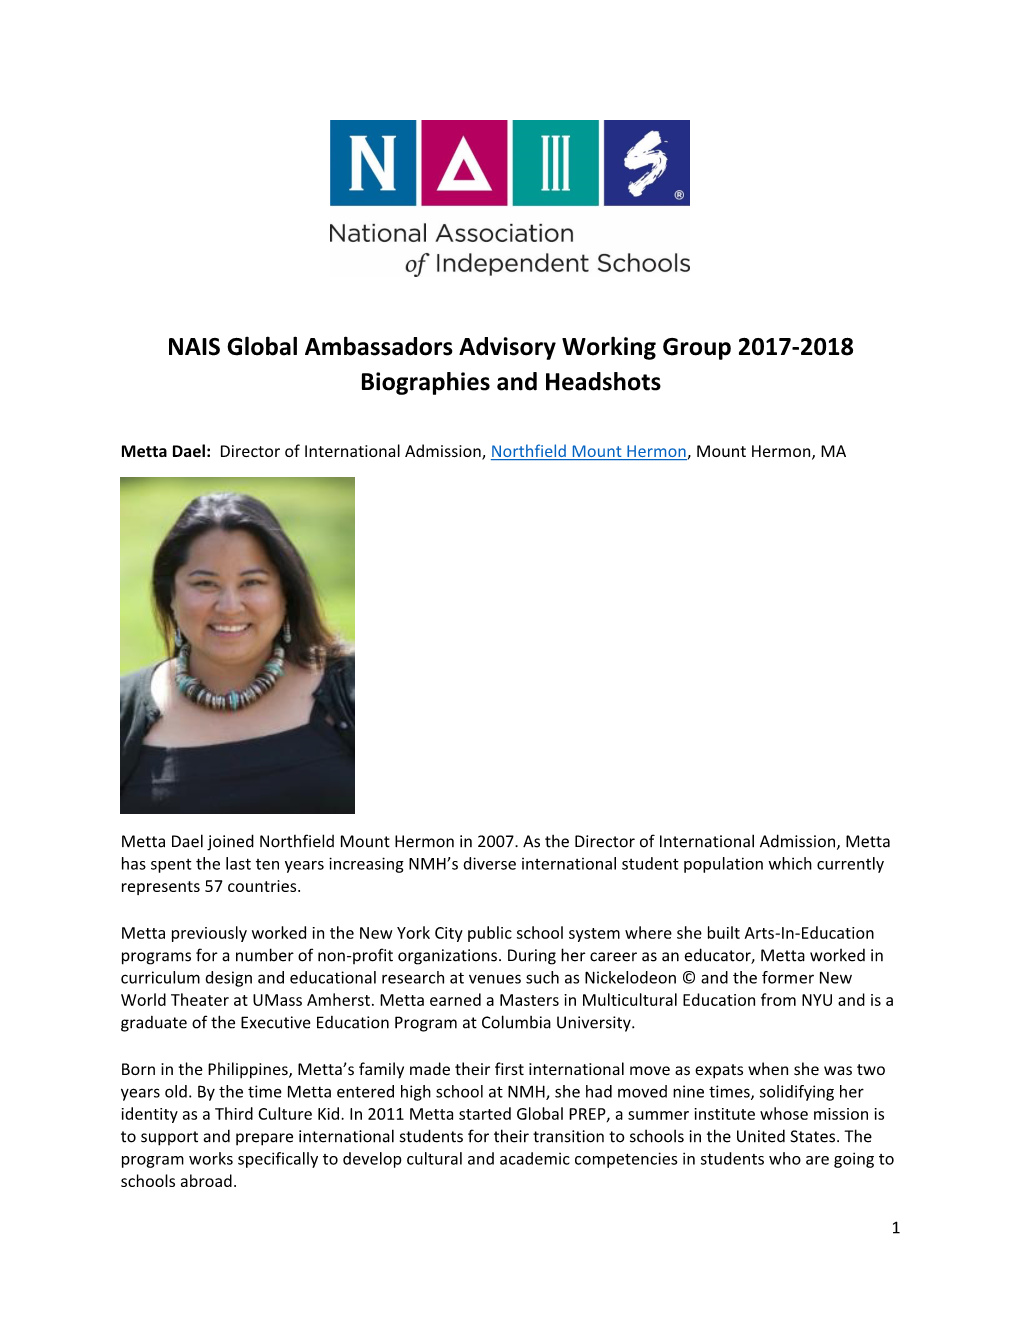 NAIS Global Ambassadors Advisory Working Group 2017-2018 Biographies and Headshots